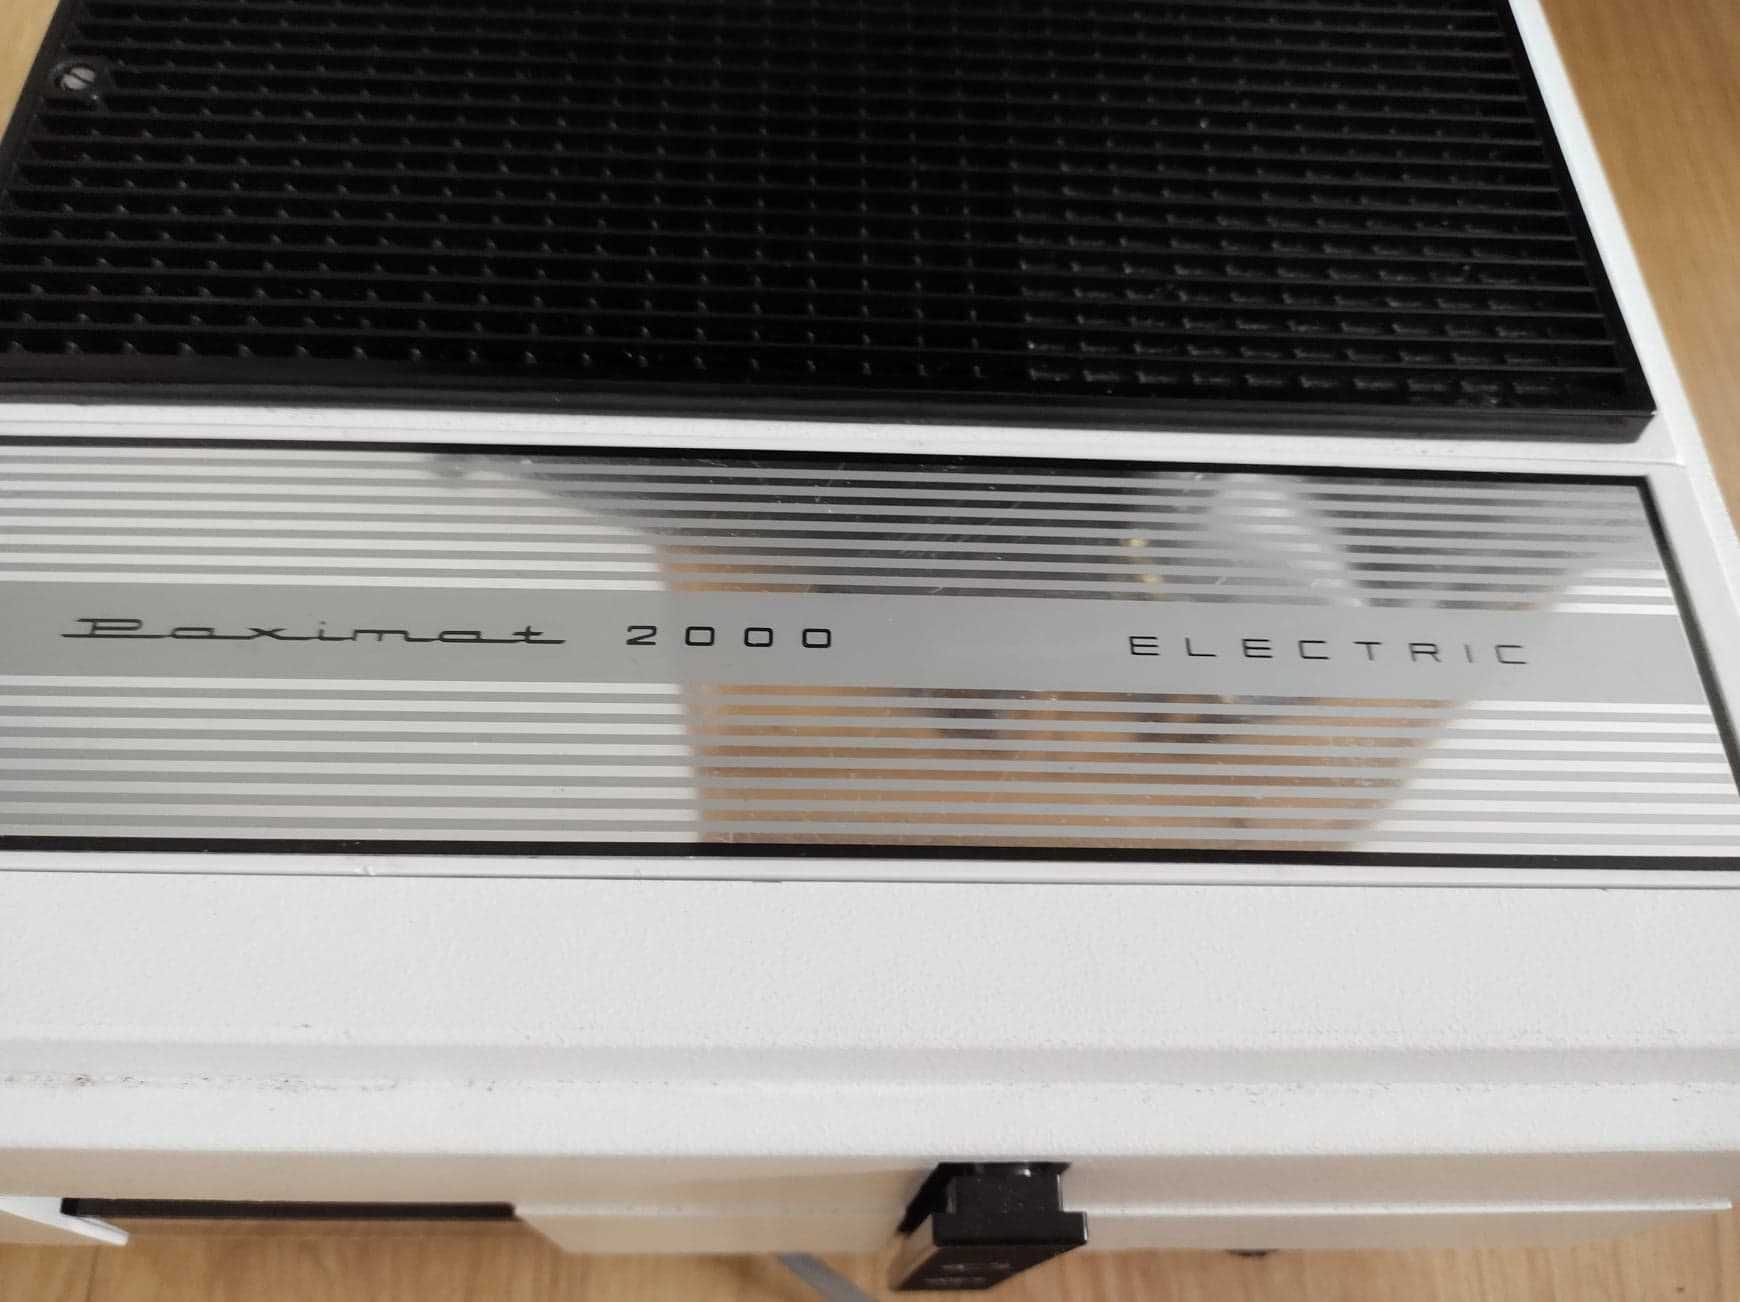 rzutnik Braun Paximat 2000 electric - vintage